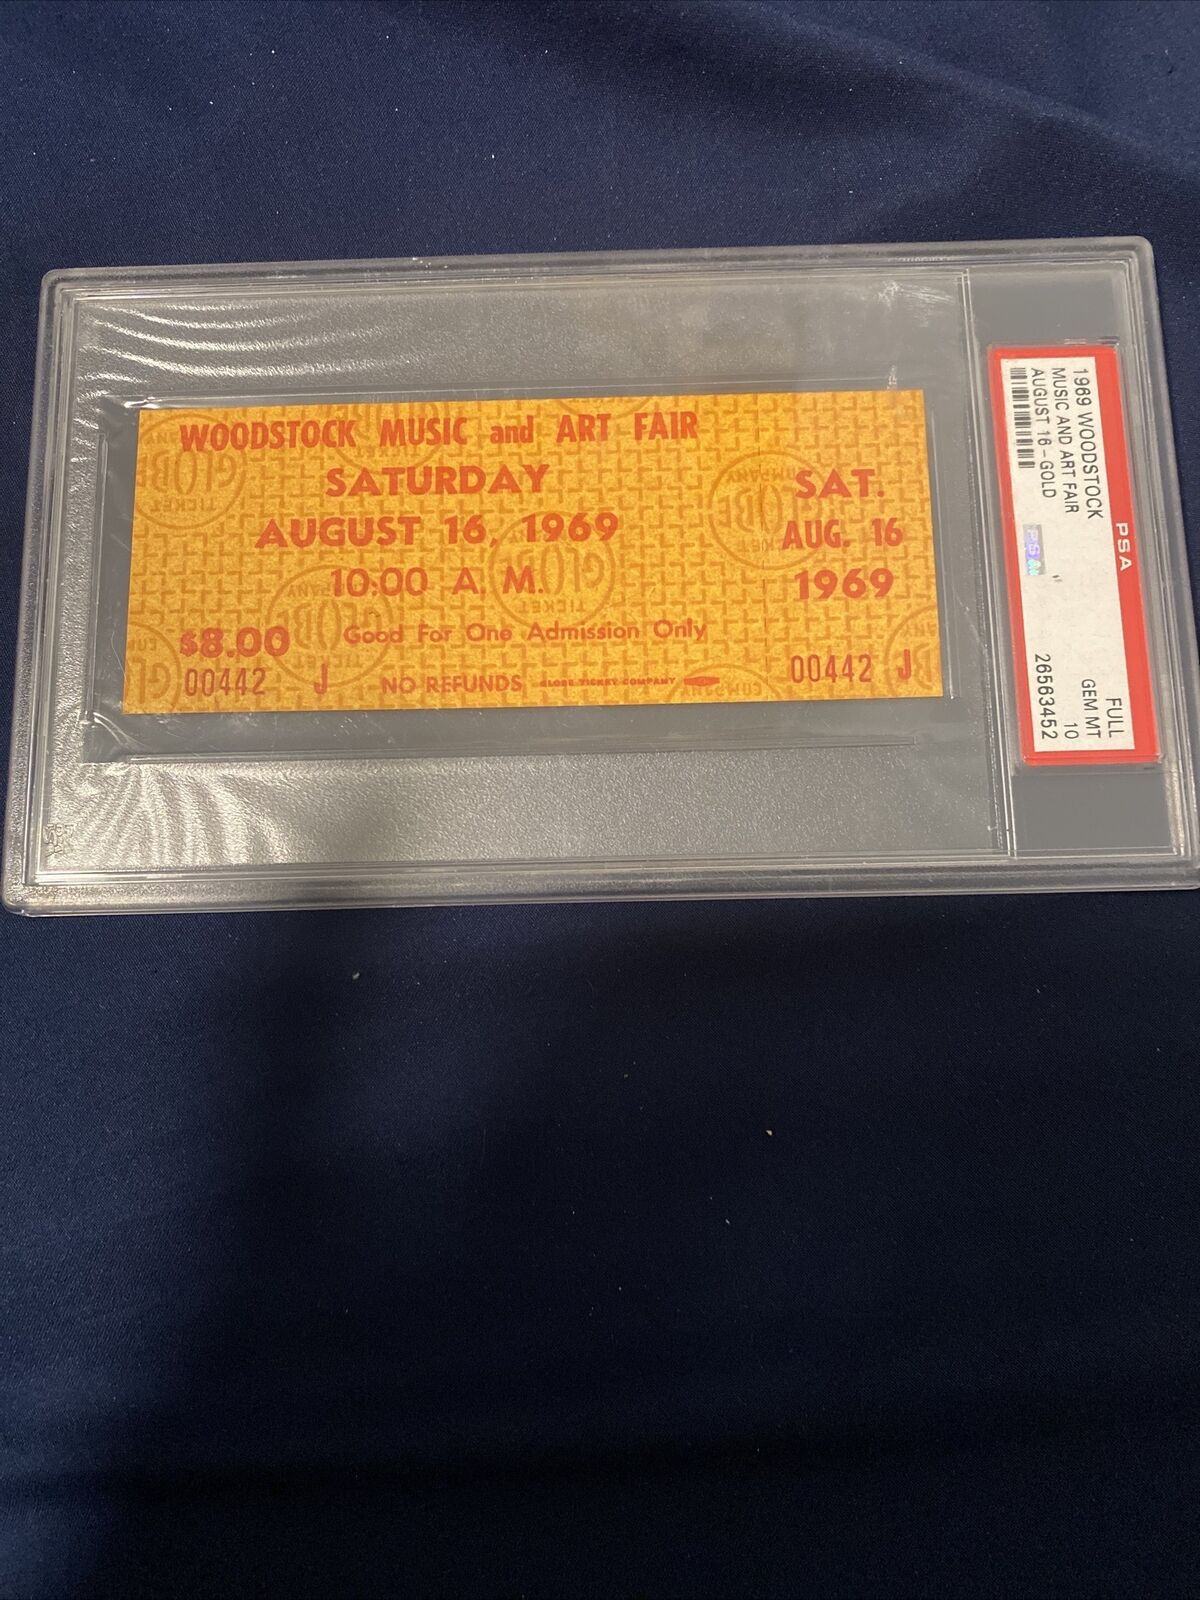 Woodstock Music And Arts Fair Ticket PSA 10 August 16 1969 Mint Ticket #00442